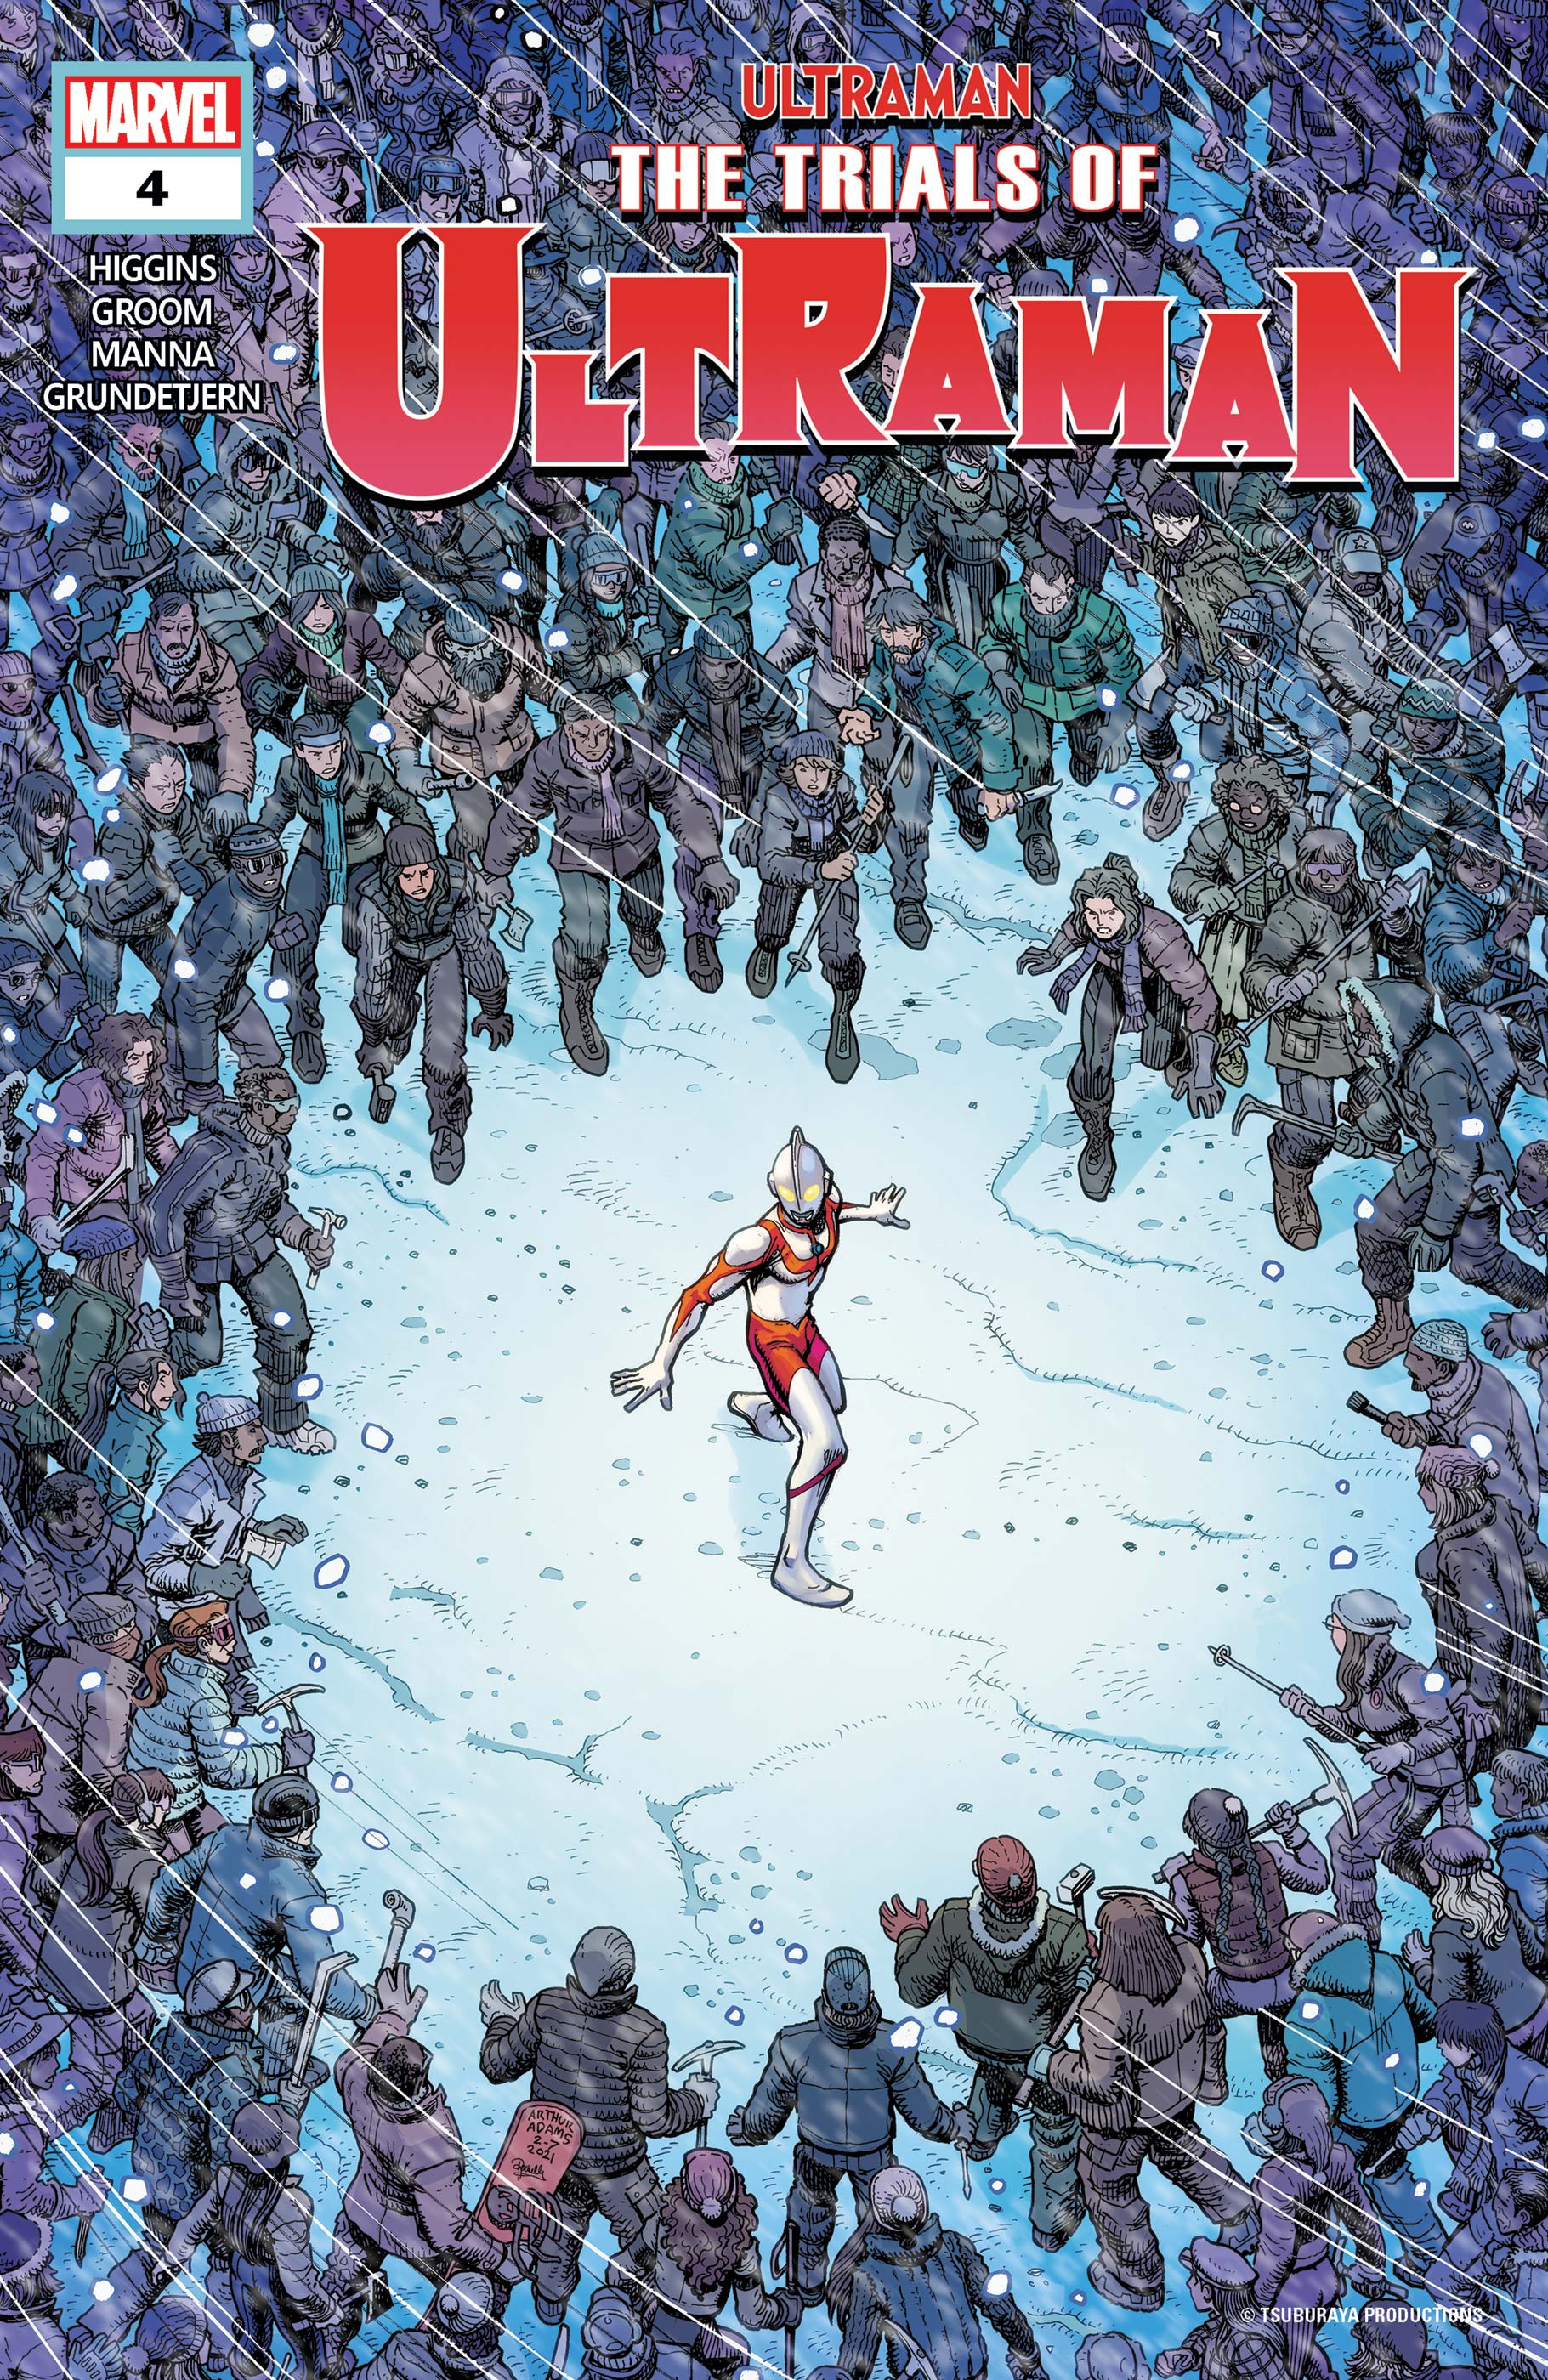 The Trials of Ultraman (2021) #4